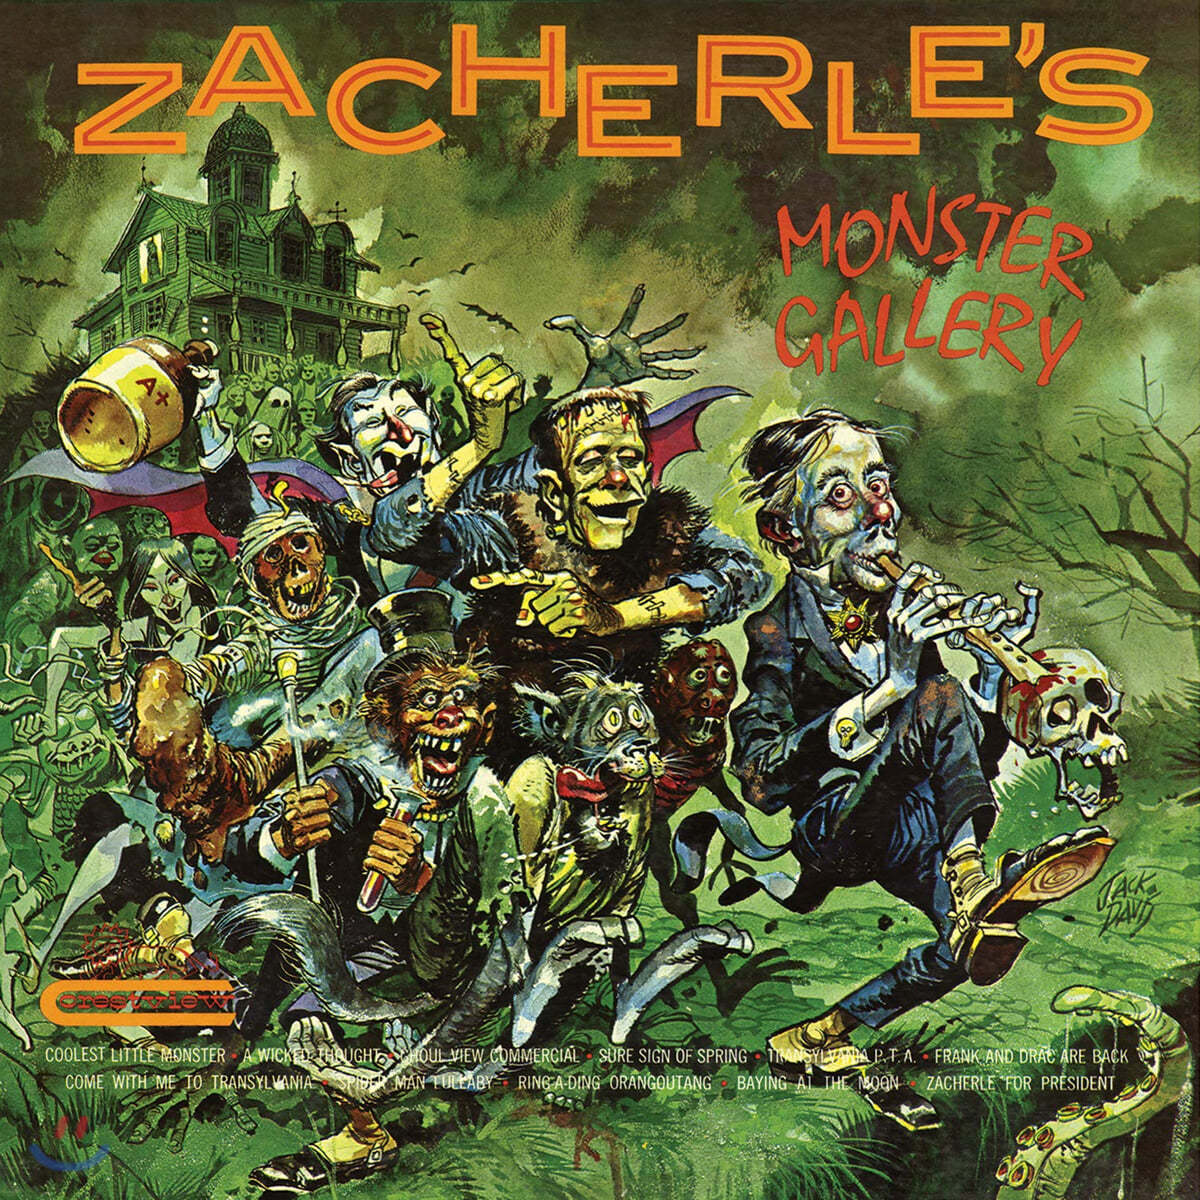 Zacherle (존 재컬리) - Zacherle&#39;s Monster Gallery [펌킨 스플래터 컬러 LP]